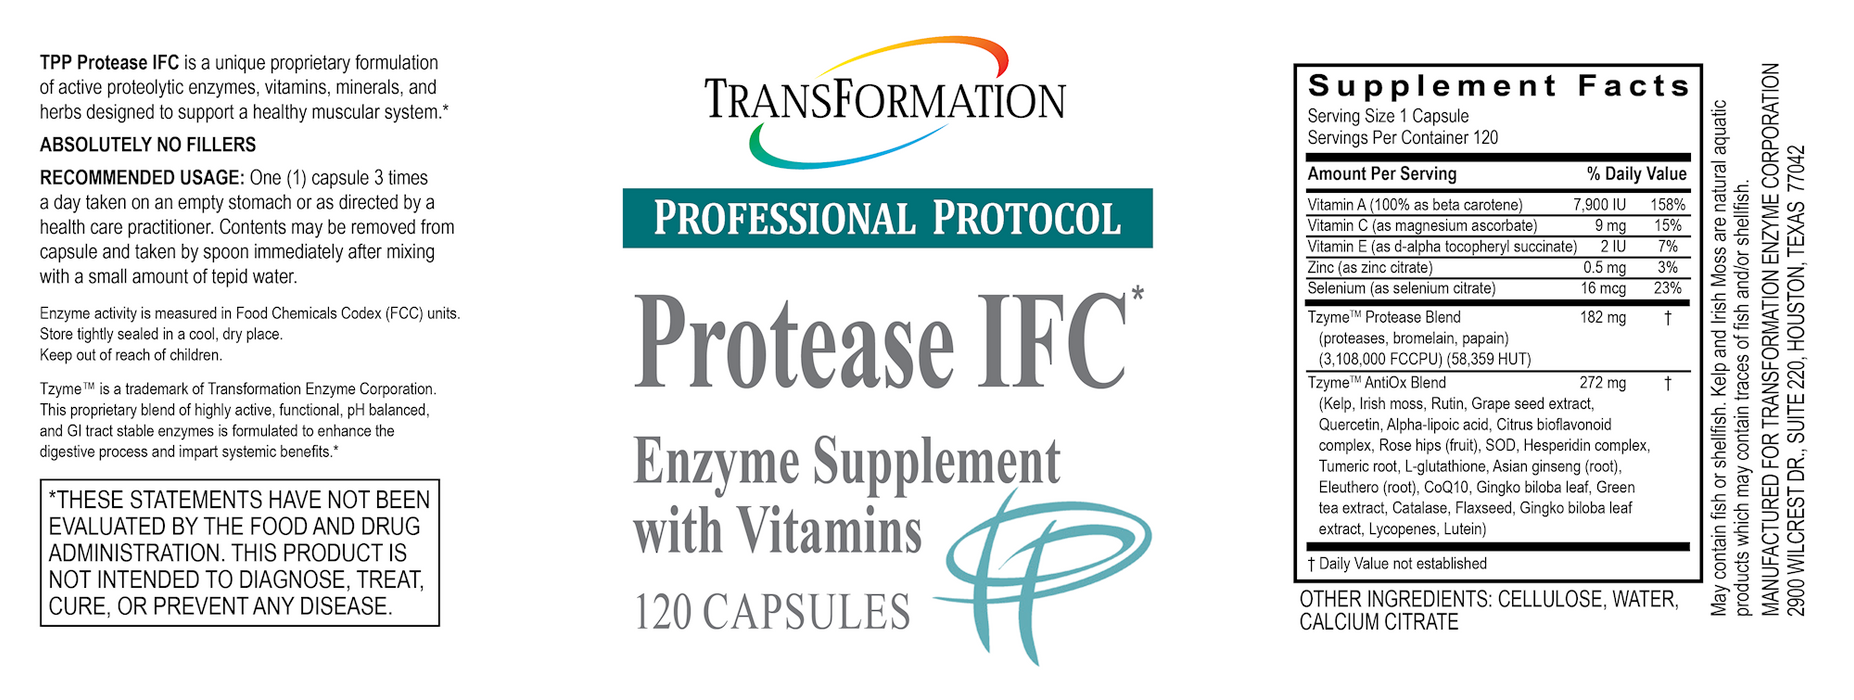 Protease IFC* 120 caps